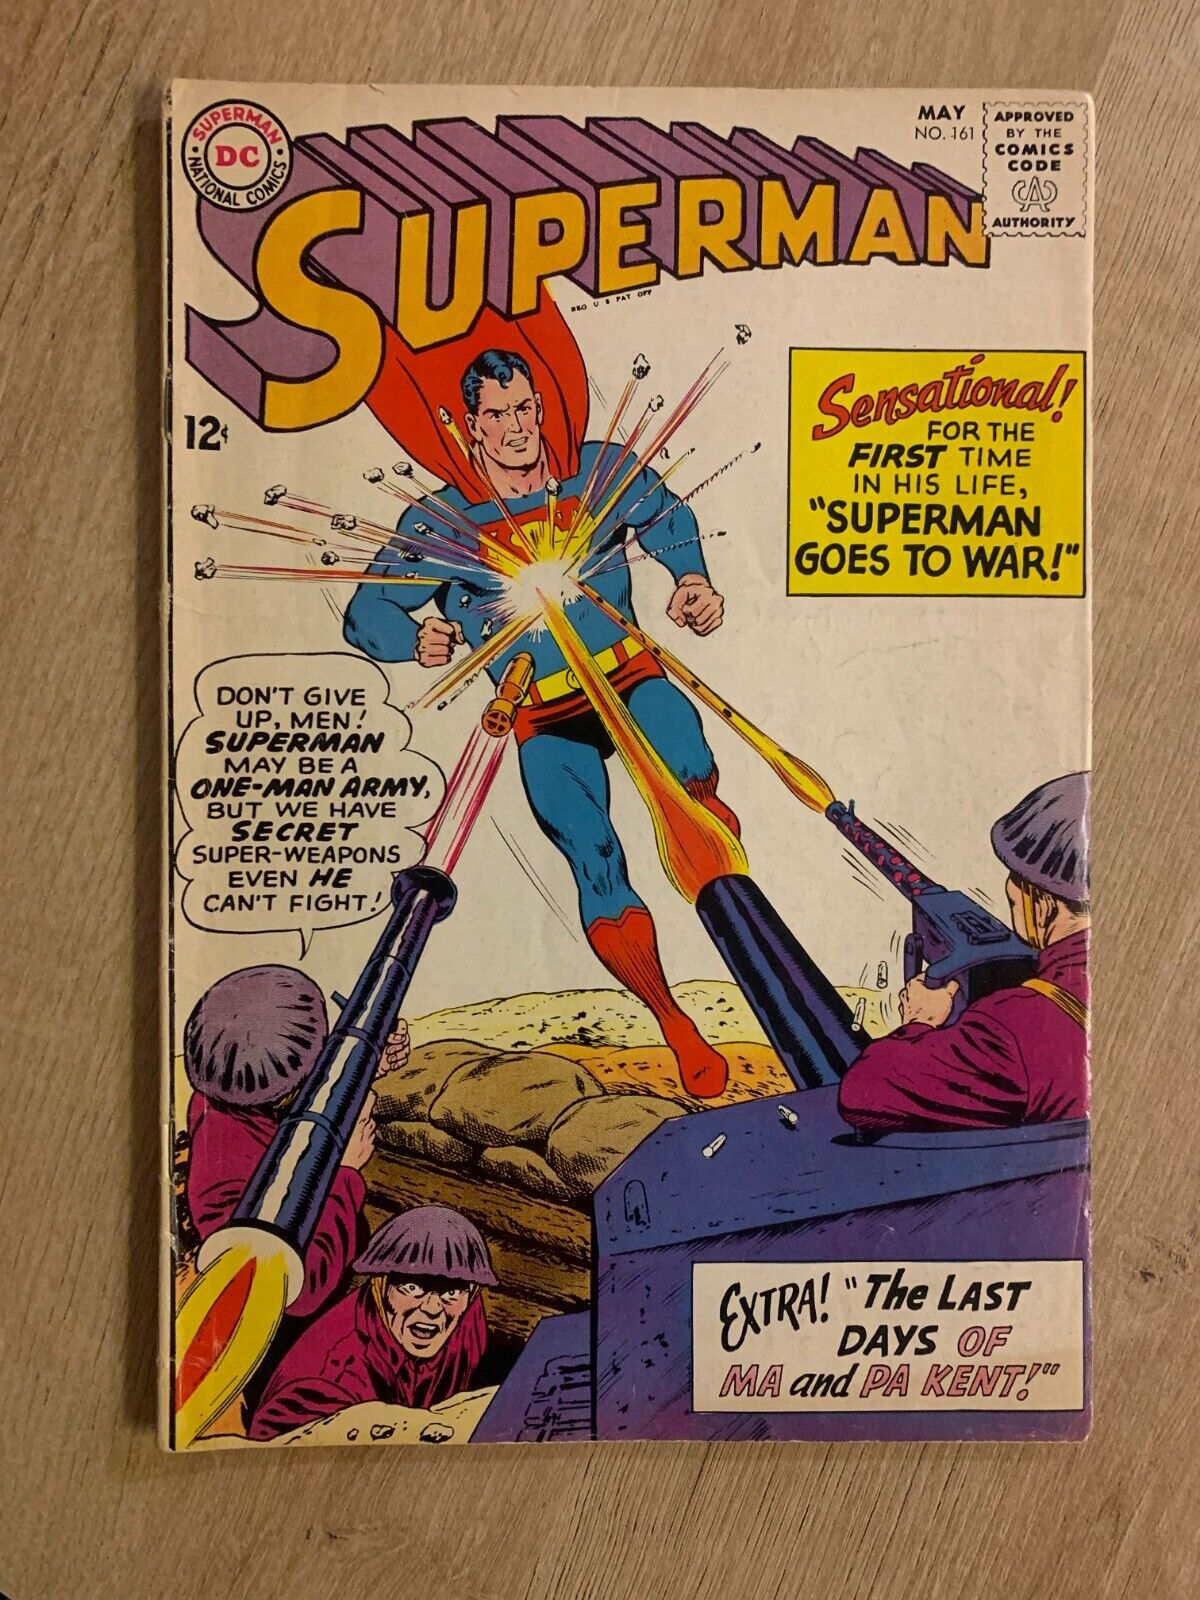 Superman #161 - May 1963 - Vol.1 - DC - Silver Age - Minor Key - 5.0 VG/FN